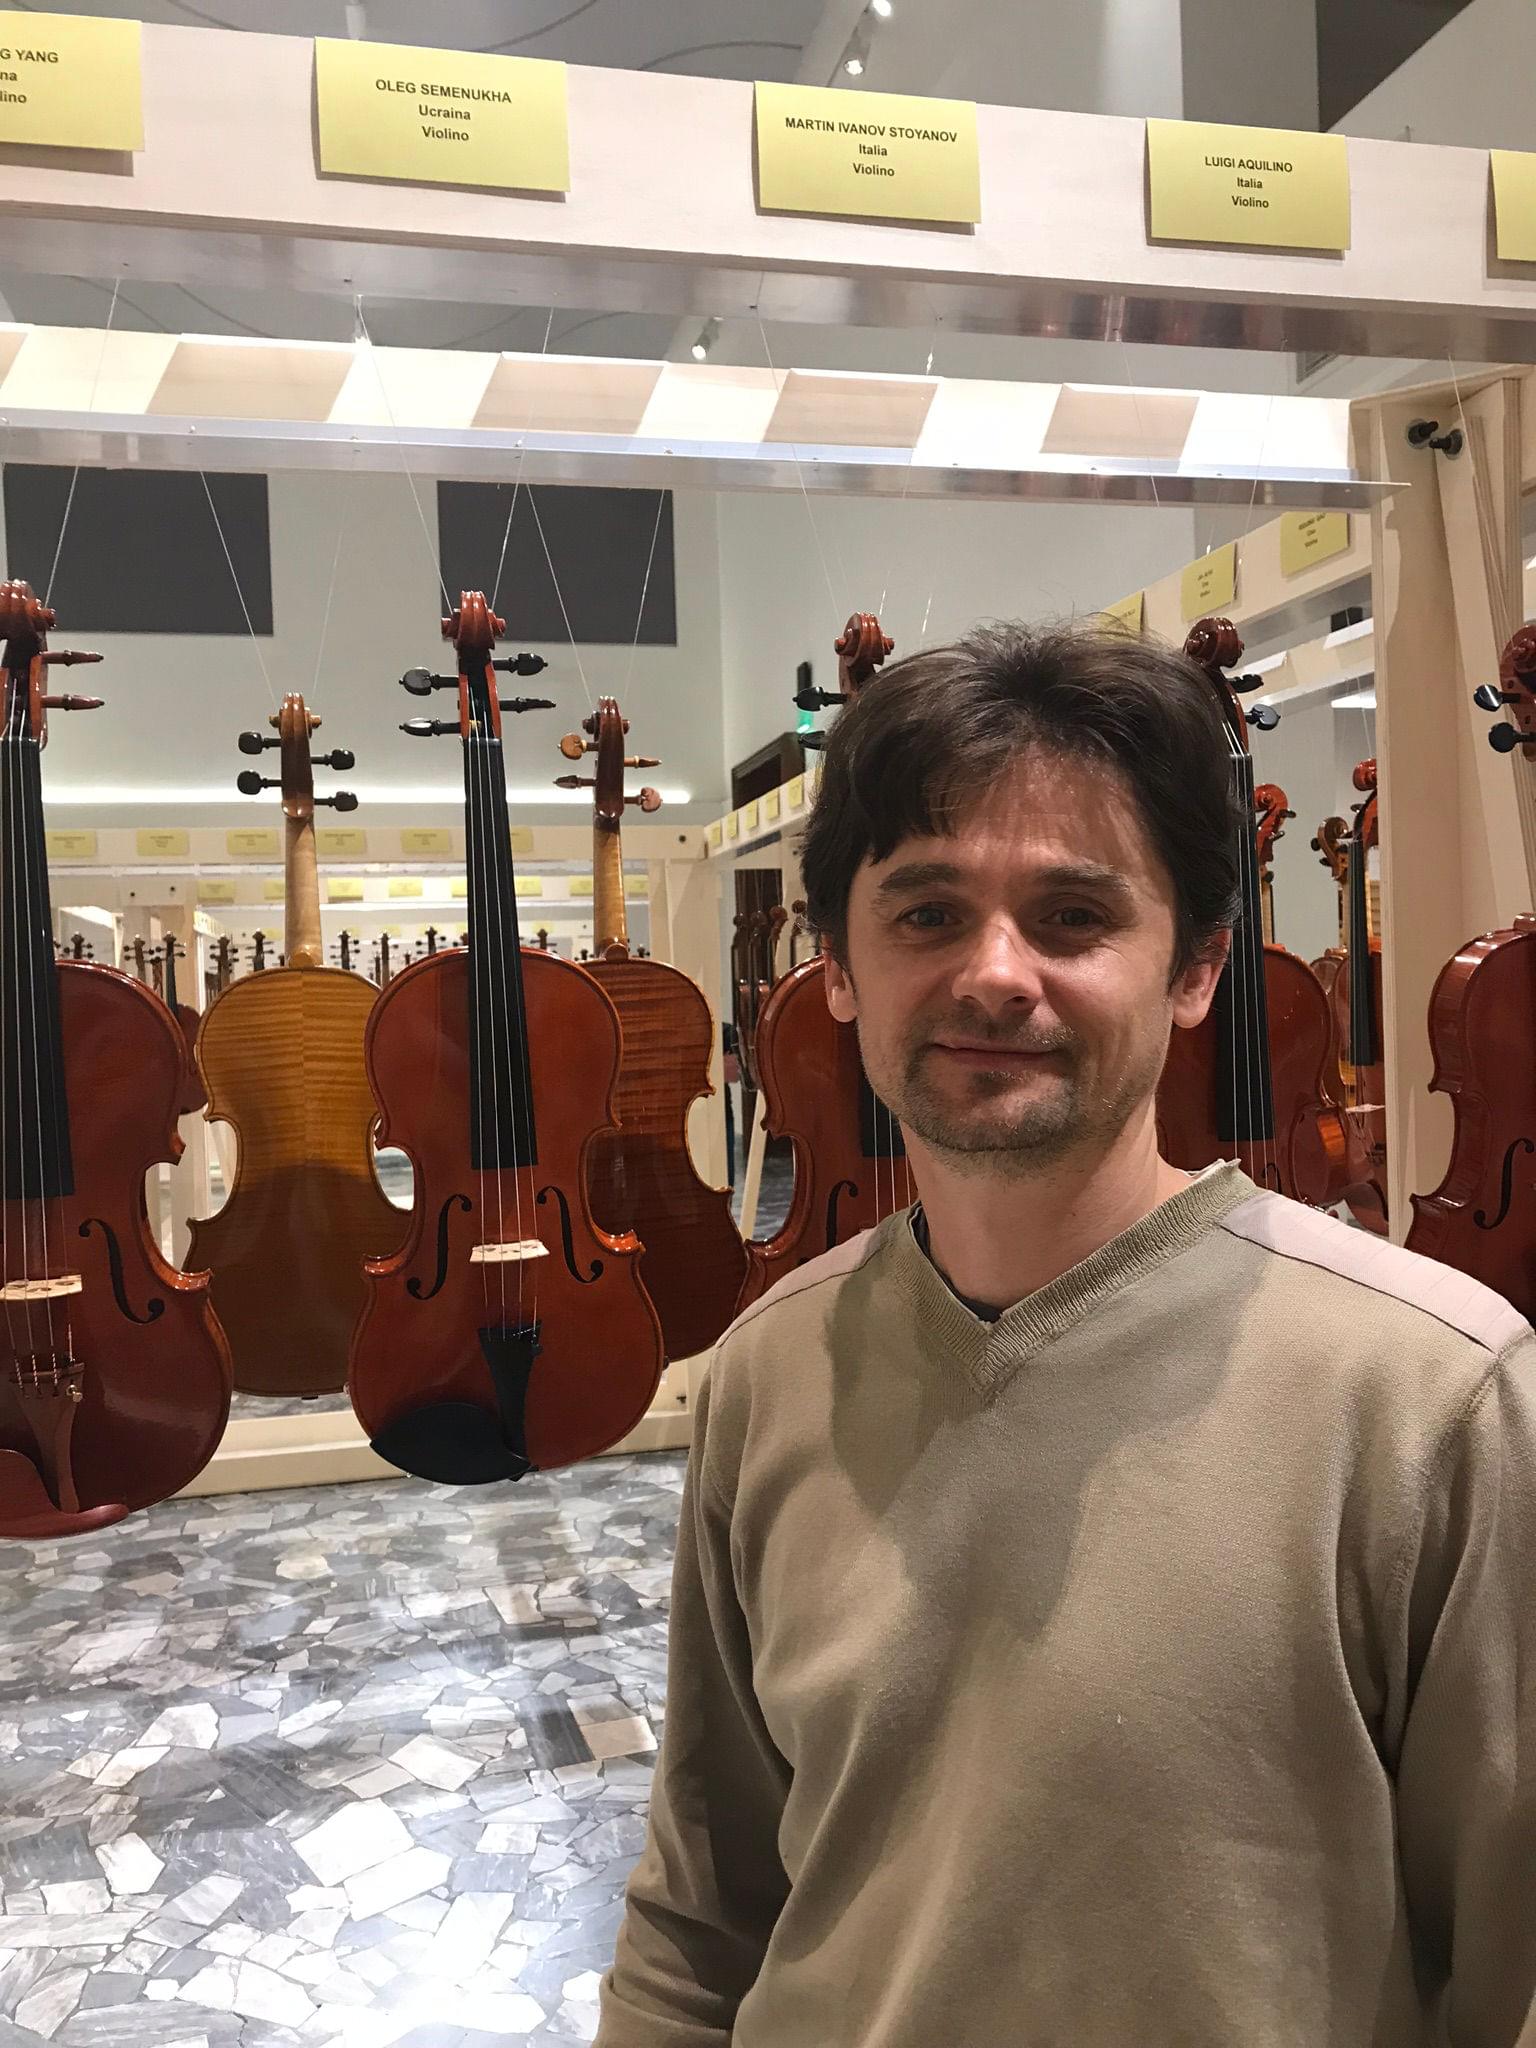 Oleg Semenukha - mistr houslař